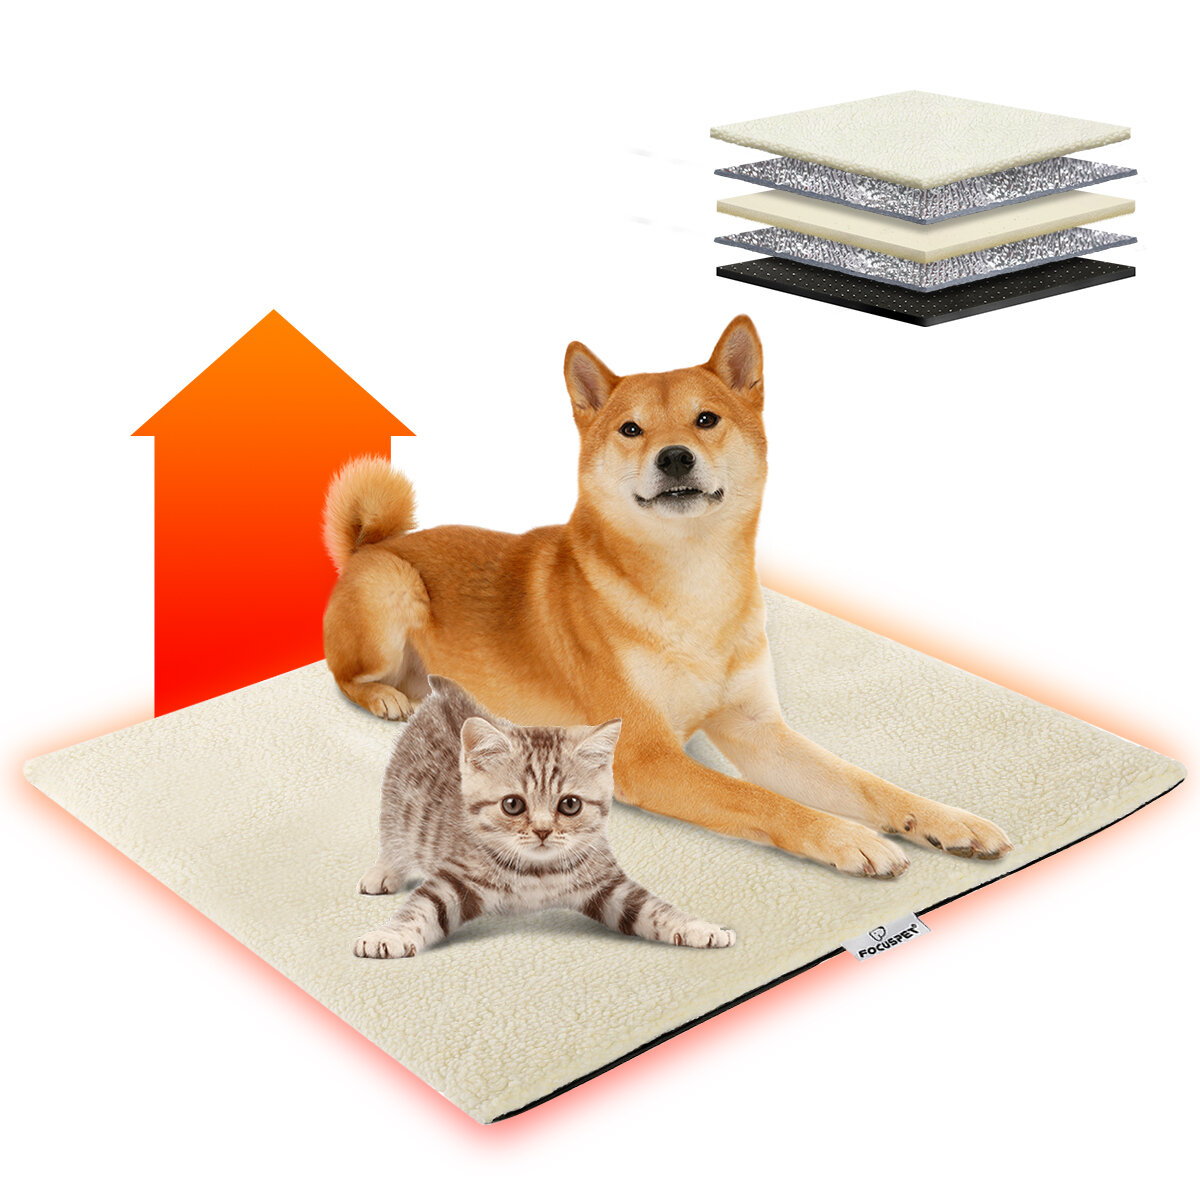 Focuspet Self-heating Blanket Warming Blanket Cat Dogs Pets Warming Mat Cat with Anti-slip Design Sleeping Pad Puppy Sup